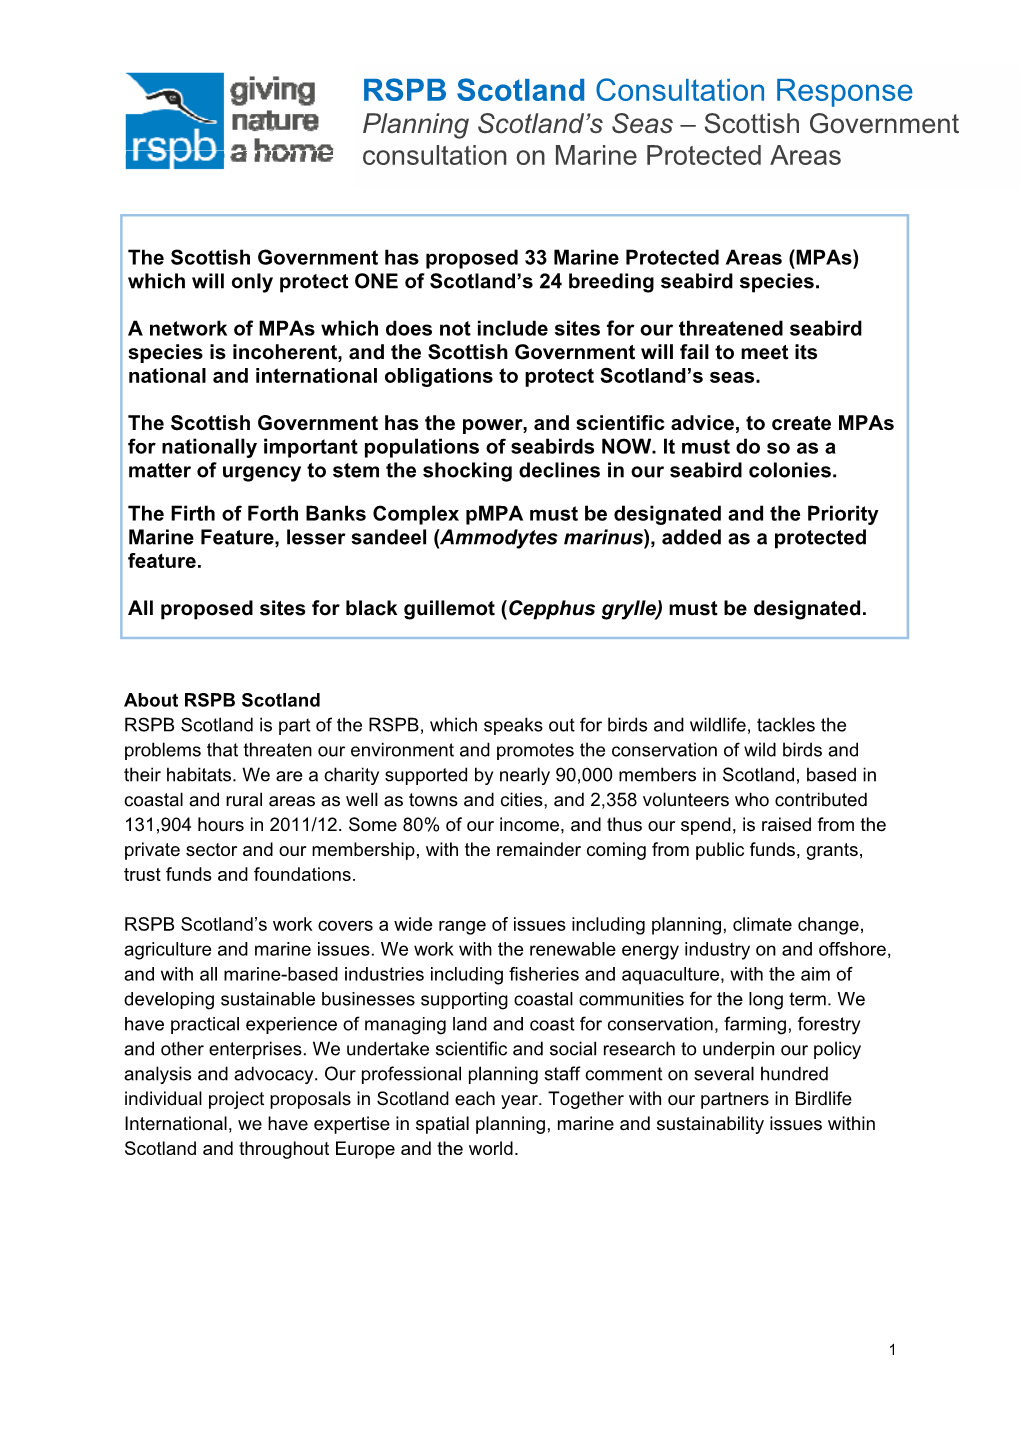 RSPB Scotland Consultation Response: Planning Scotland's Seas